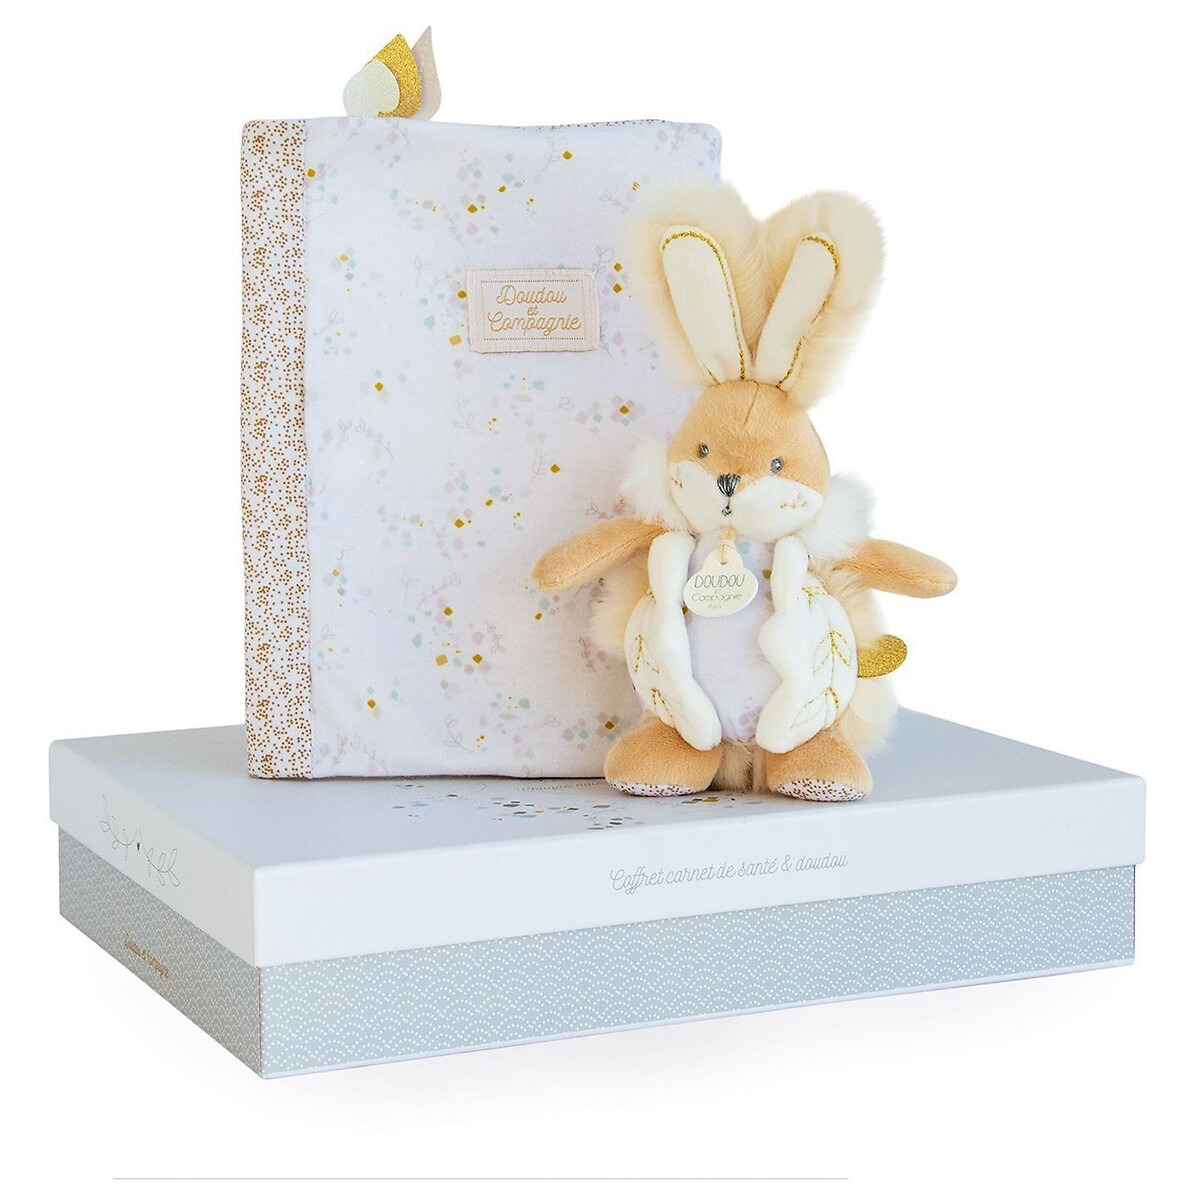 Health Book & Rabbit Soft Toy Gift Box - image 1